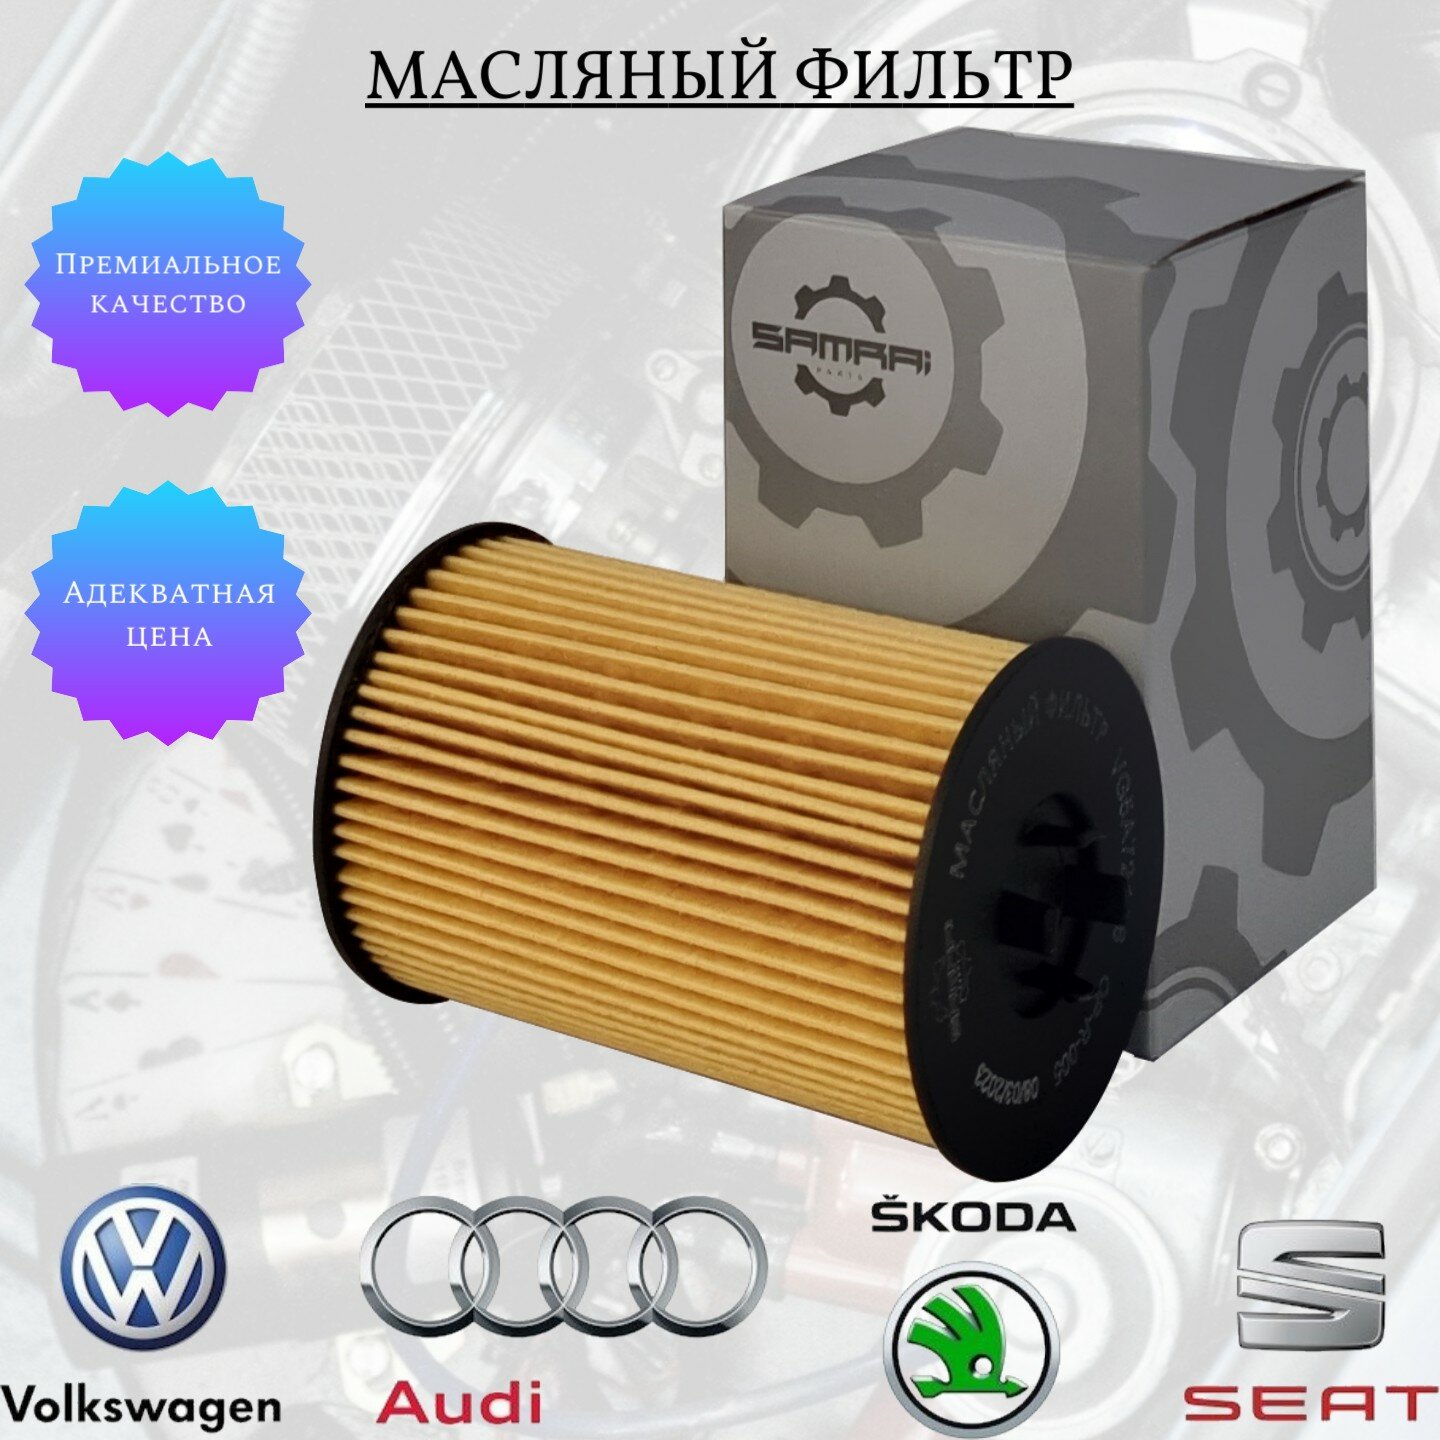 Масляный фильтр Samrai Parts для Audi, Volkswagen, Skoda VG5A72106, 03N 115 466, HU 7020 z, 61027A5